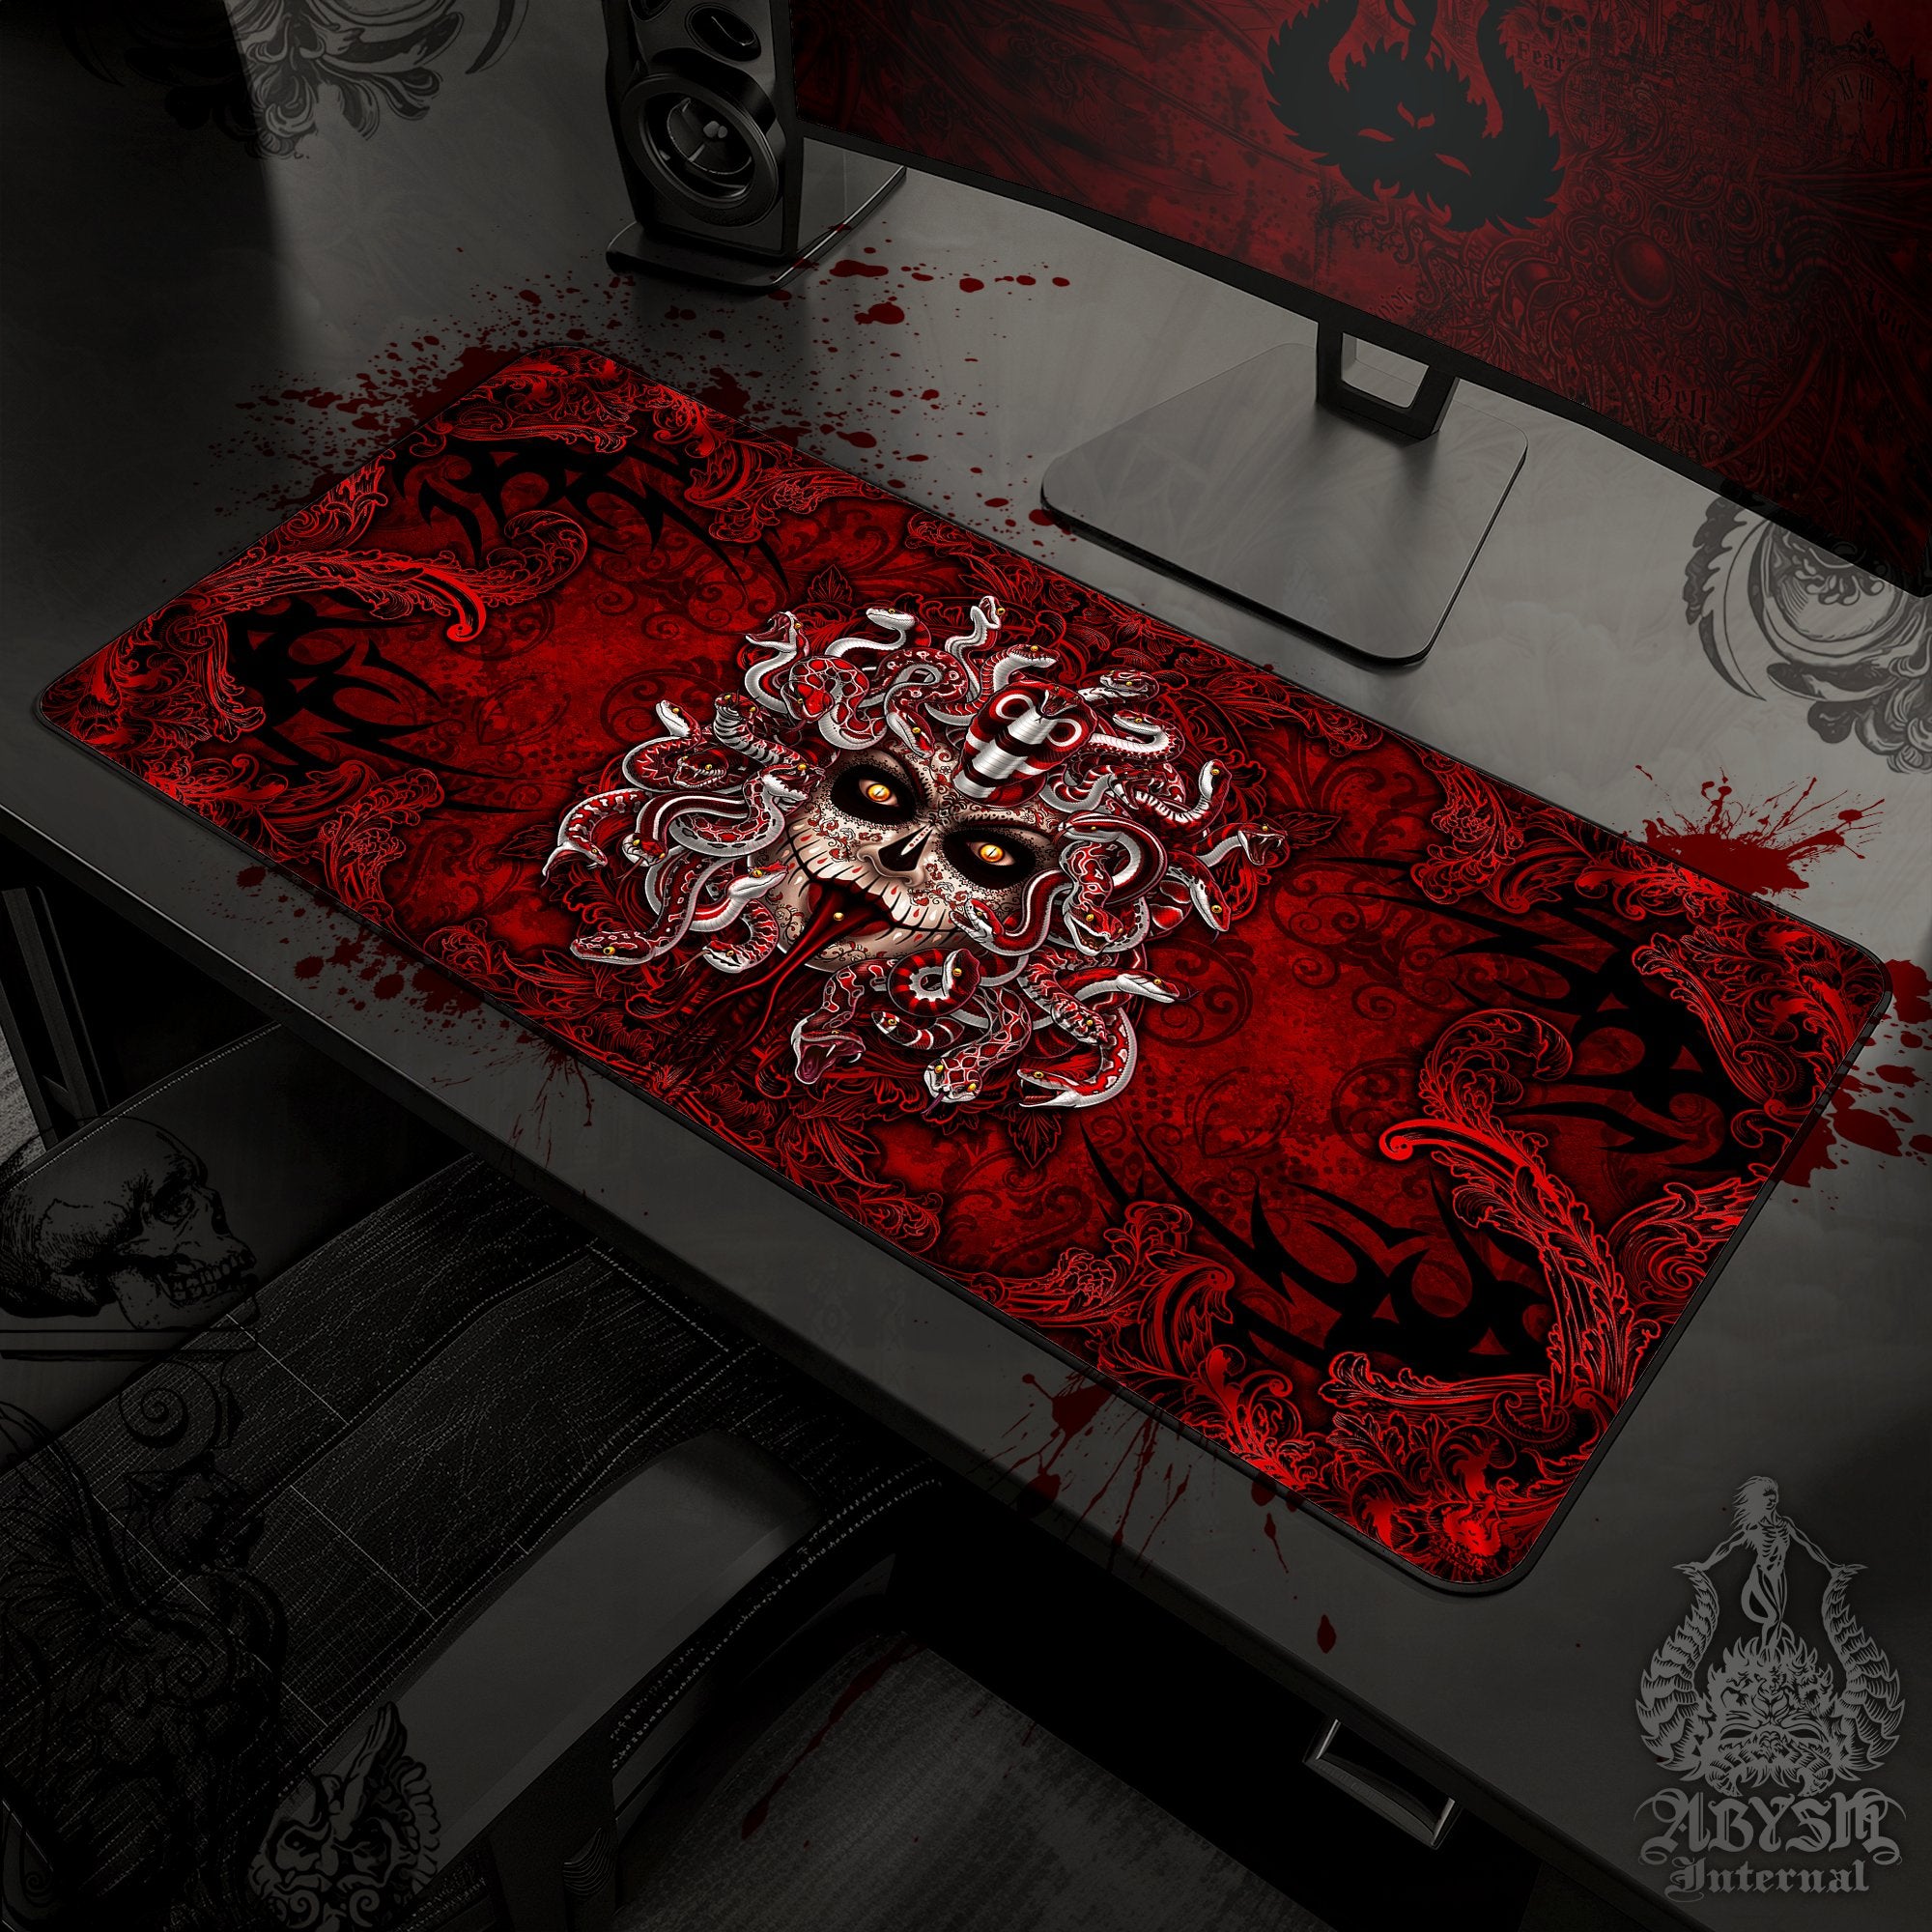 Catrina Desk Mat, Day of the Dead Gaming Mouse Pad, Dia de los Muertos Table Protector Cover, Gothic Medusa Workpad, Dark Fantasy Art Print - Abysm Internal